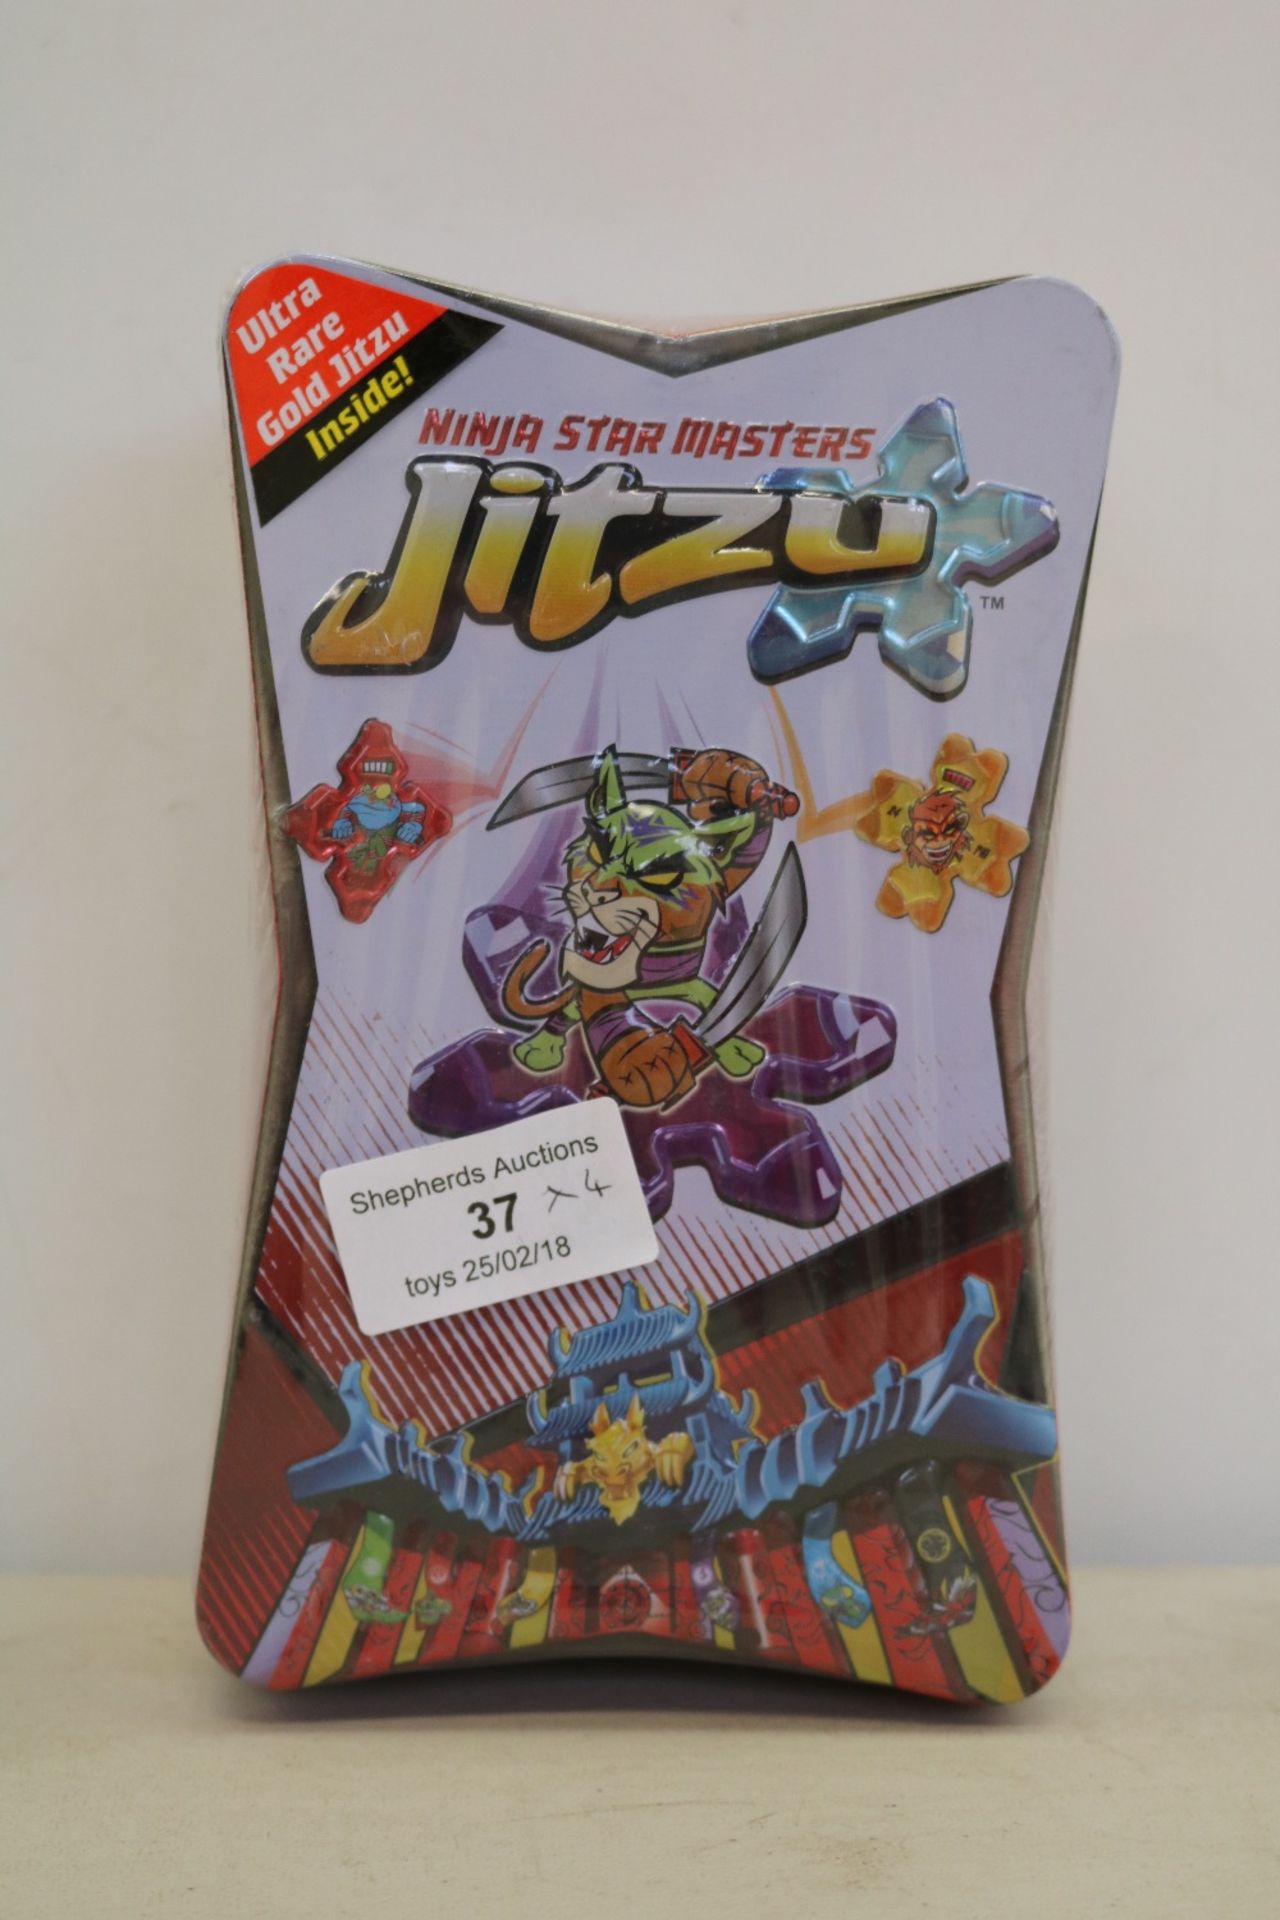 4x Jitzu ninja star masters, new and factory sealed in tin box.